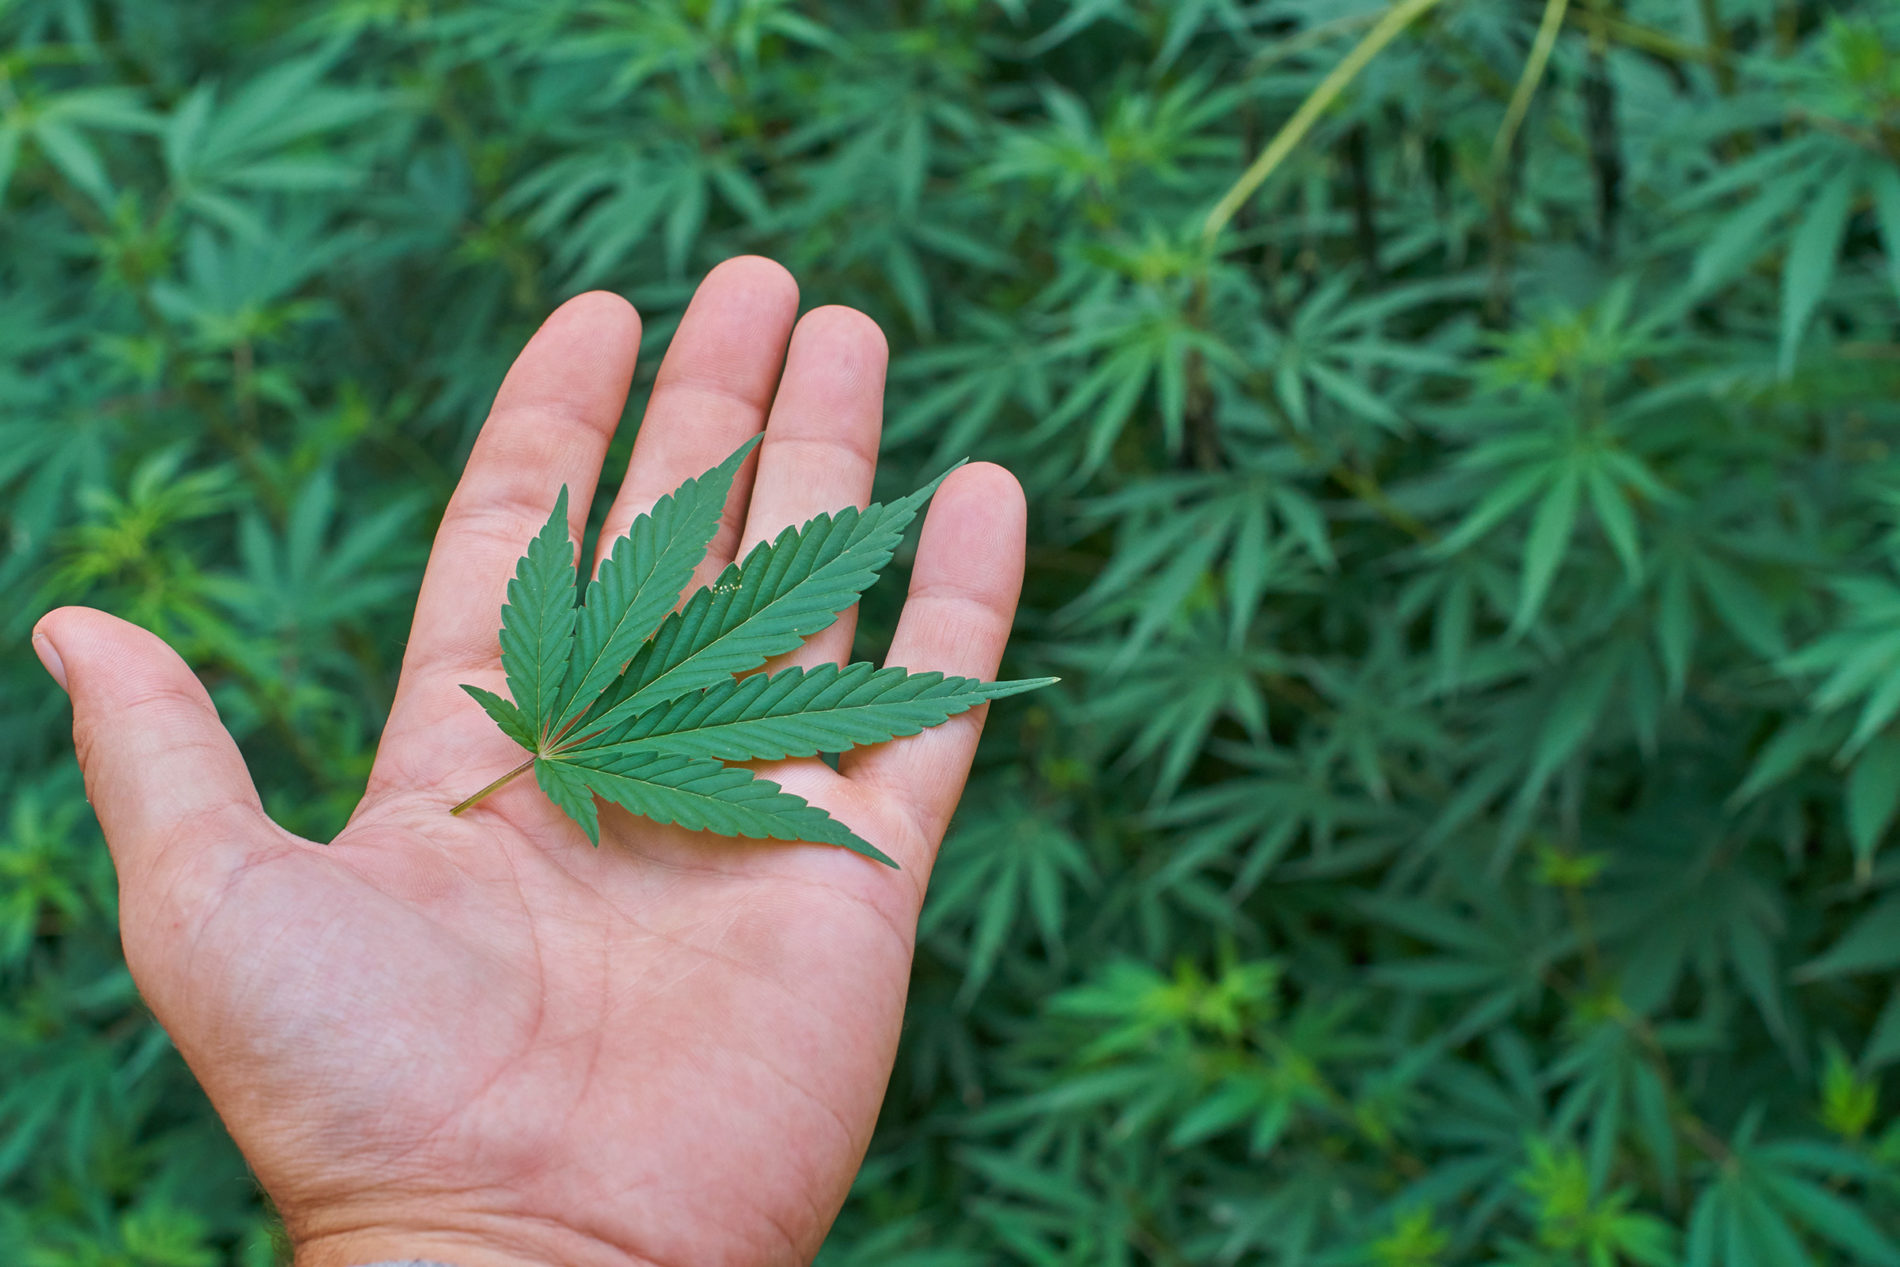 Hand holding a medical marijuana leaf in front of marijuana plants